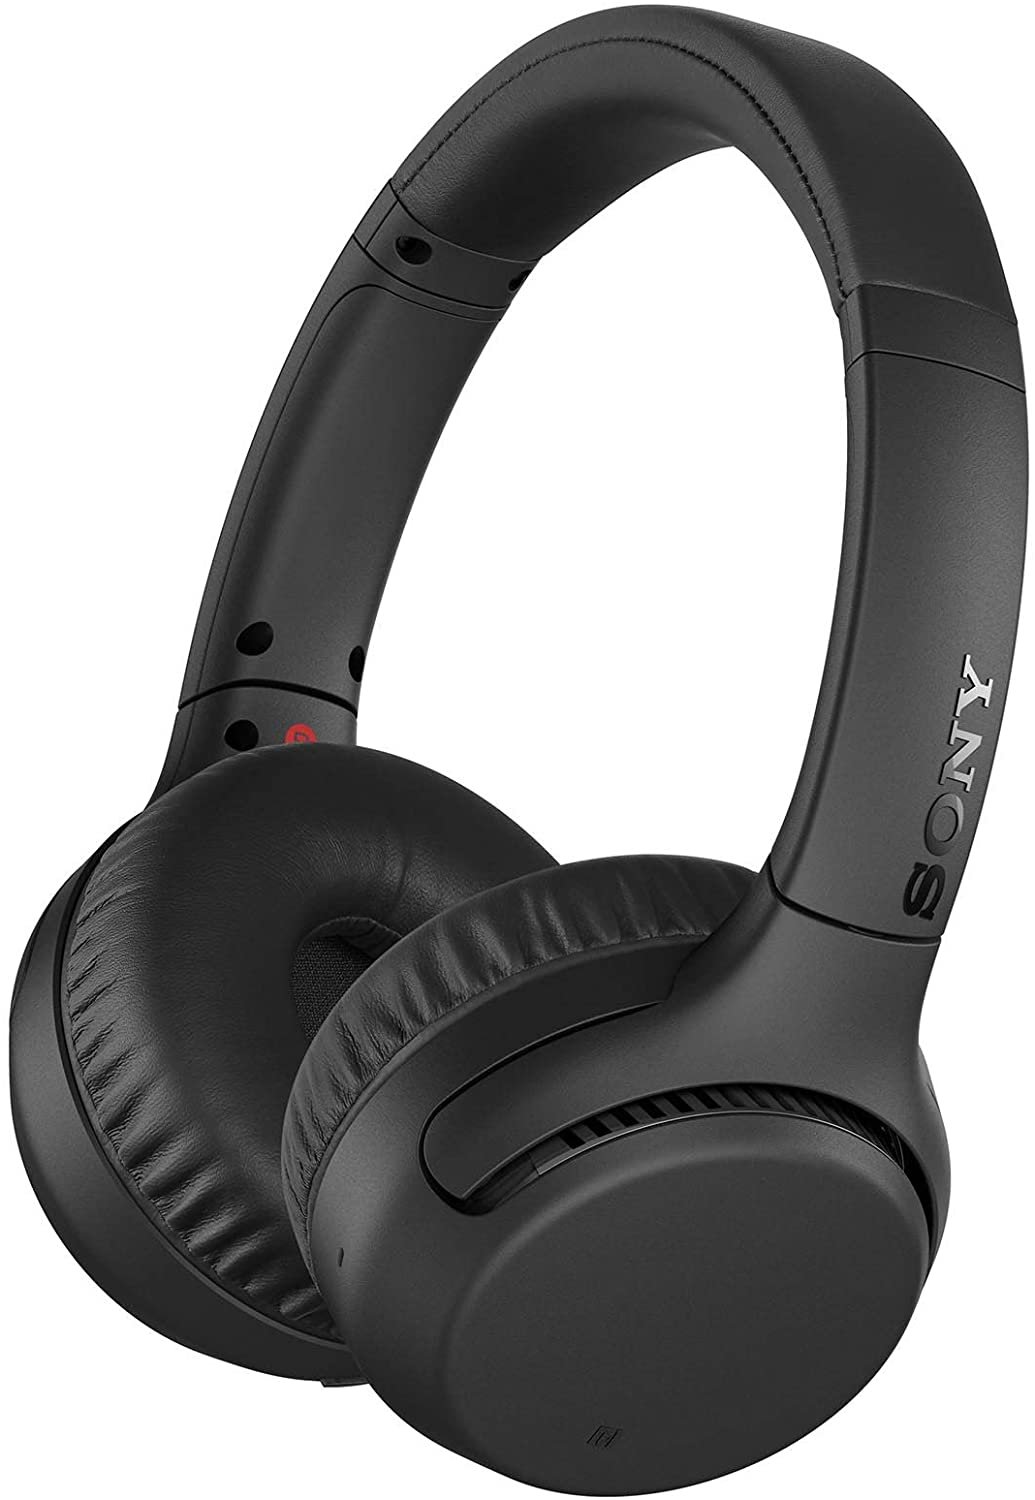 Sony WHXB700 Wireless Extra Bass Bluetooth Headset